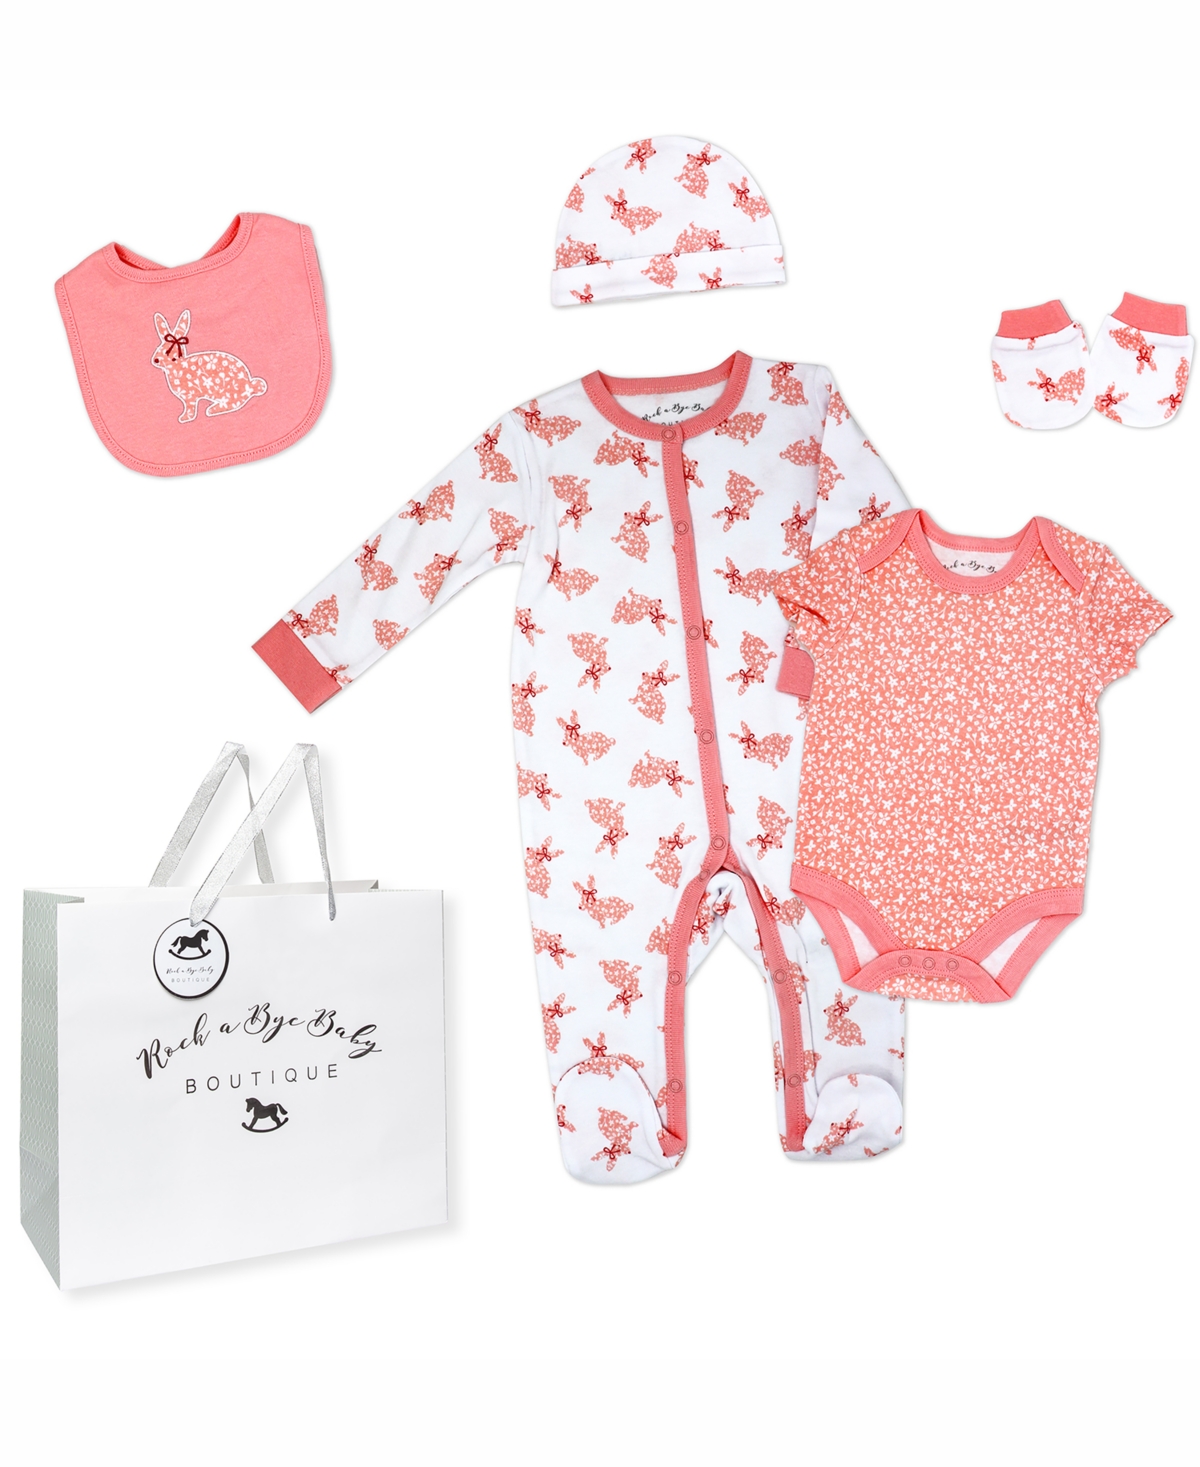 Rock-a-bye Baby Boutique Baby Girls Layette Gift Bag Set In Dark Peach